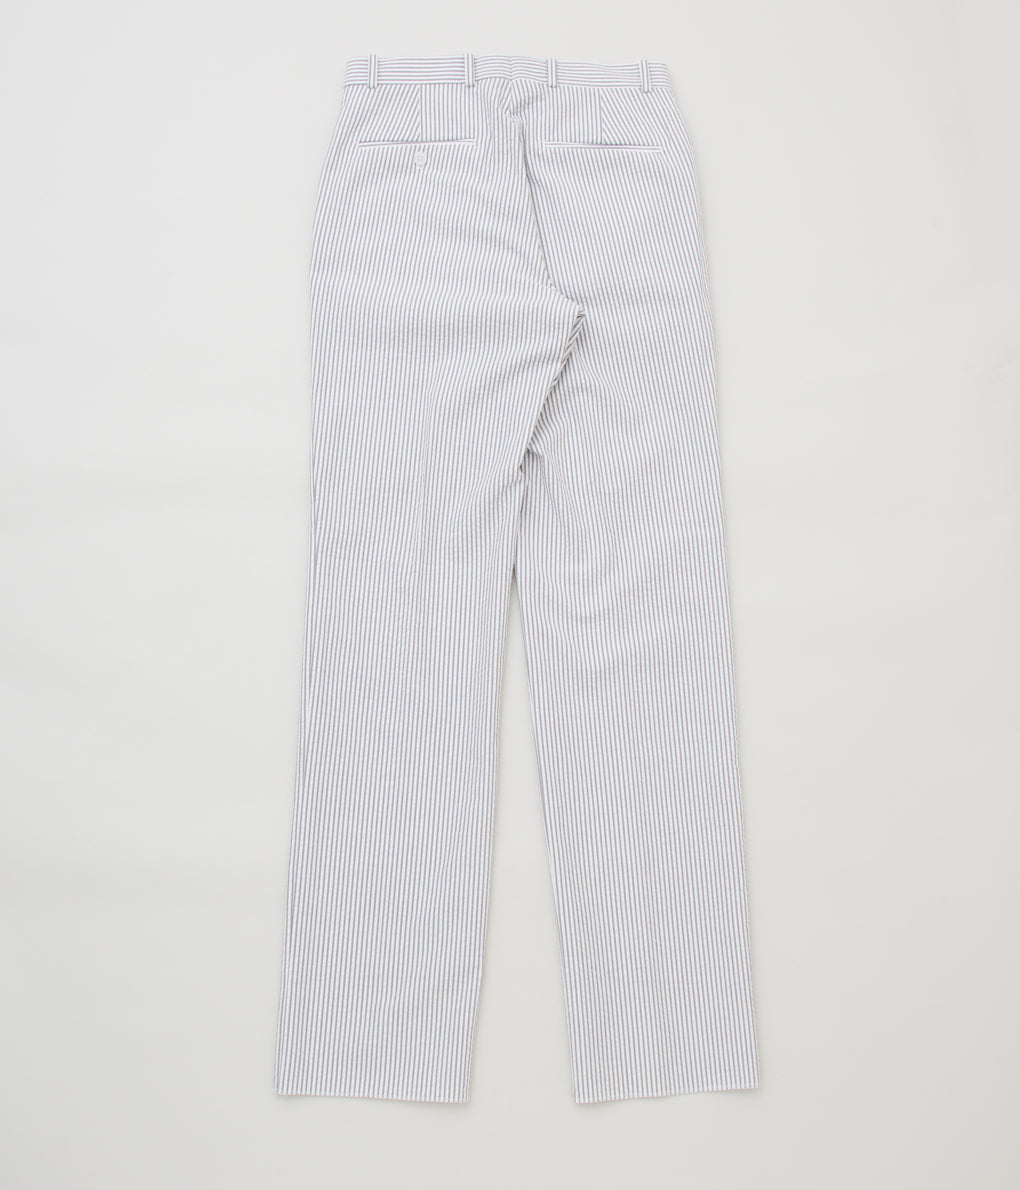 INDIVIDUALIZED CLOTHING "SEERSUCKER PANTS" (GRAY STRIPE)